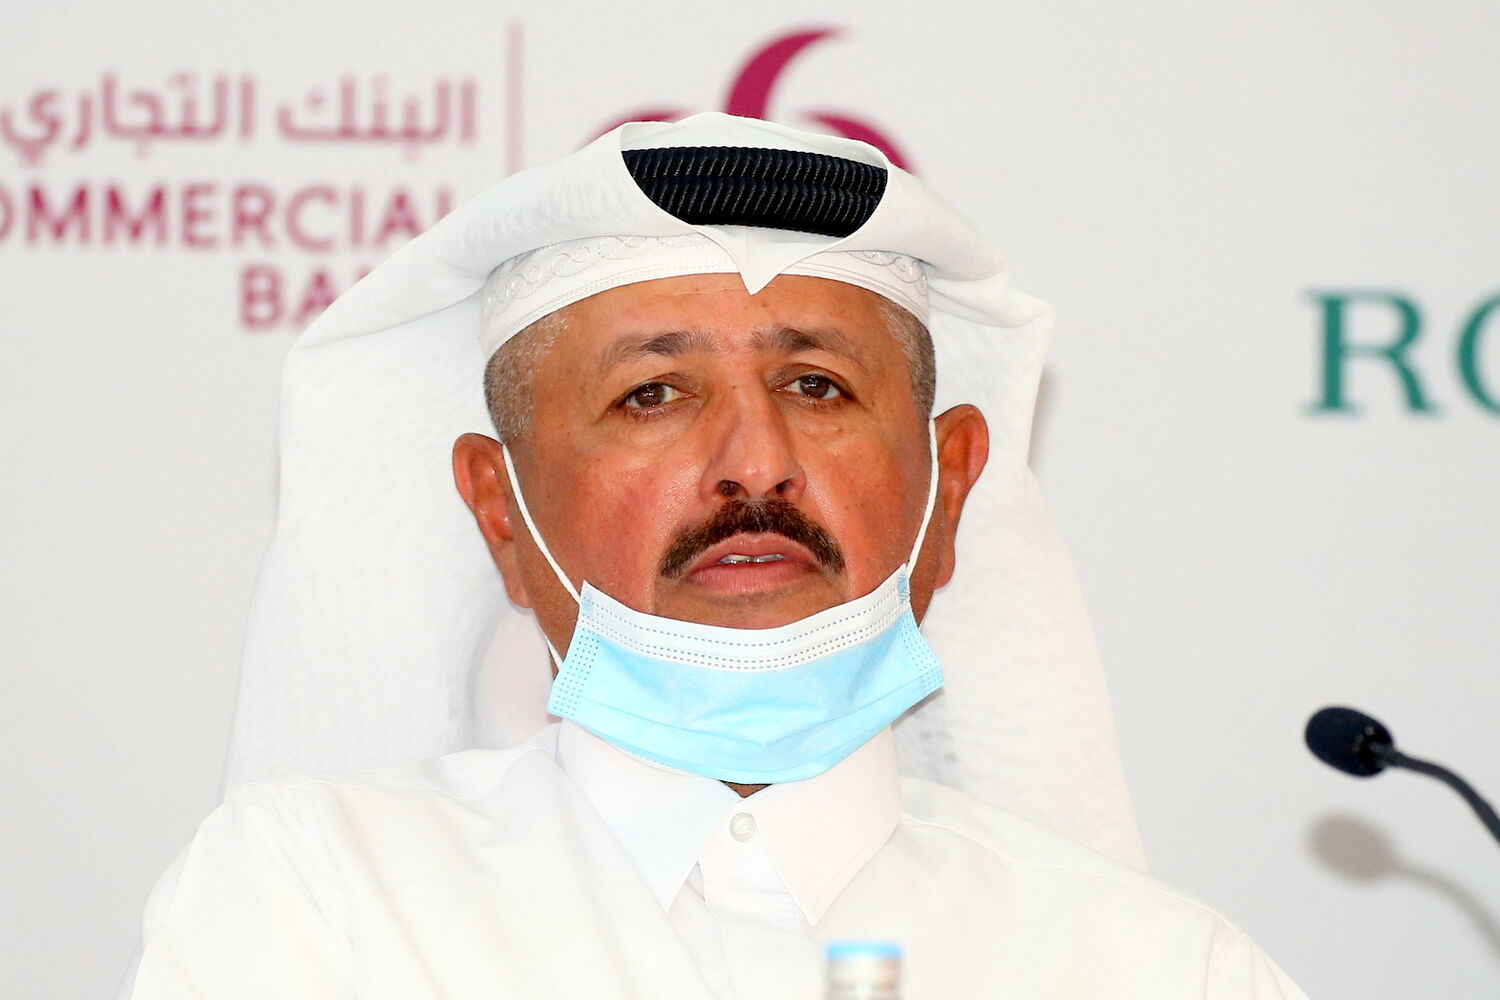 Qatar Masters means a lot for us, says QGA Secretary Fahad Al Naimi